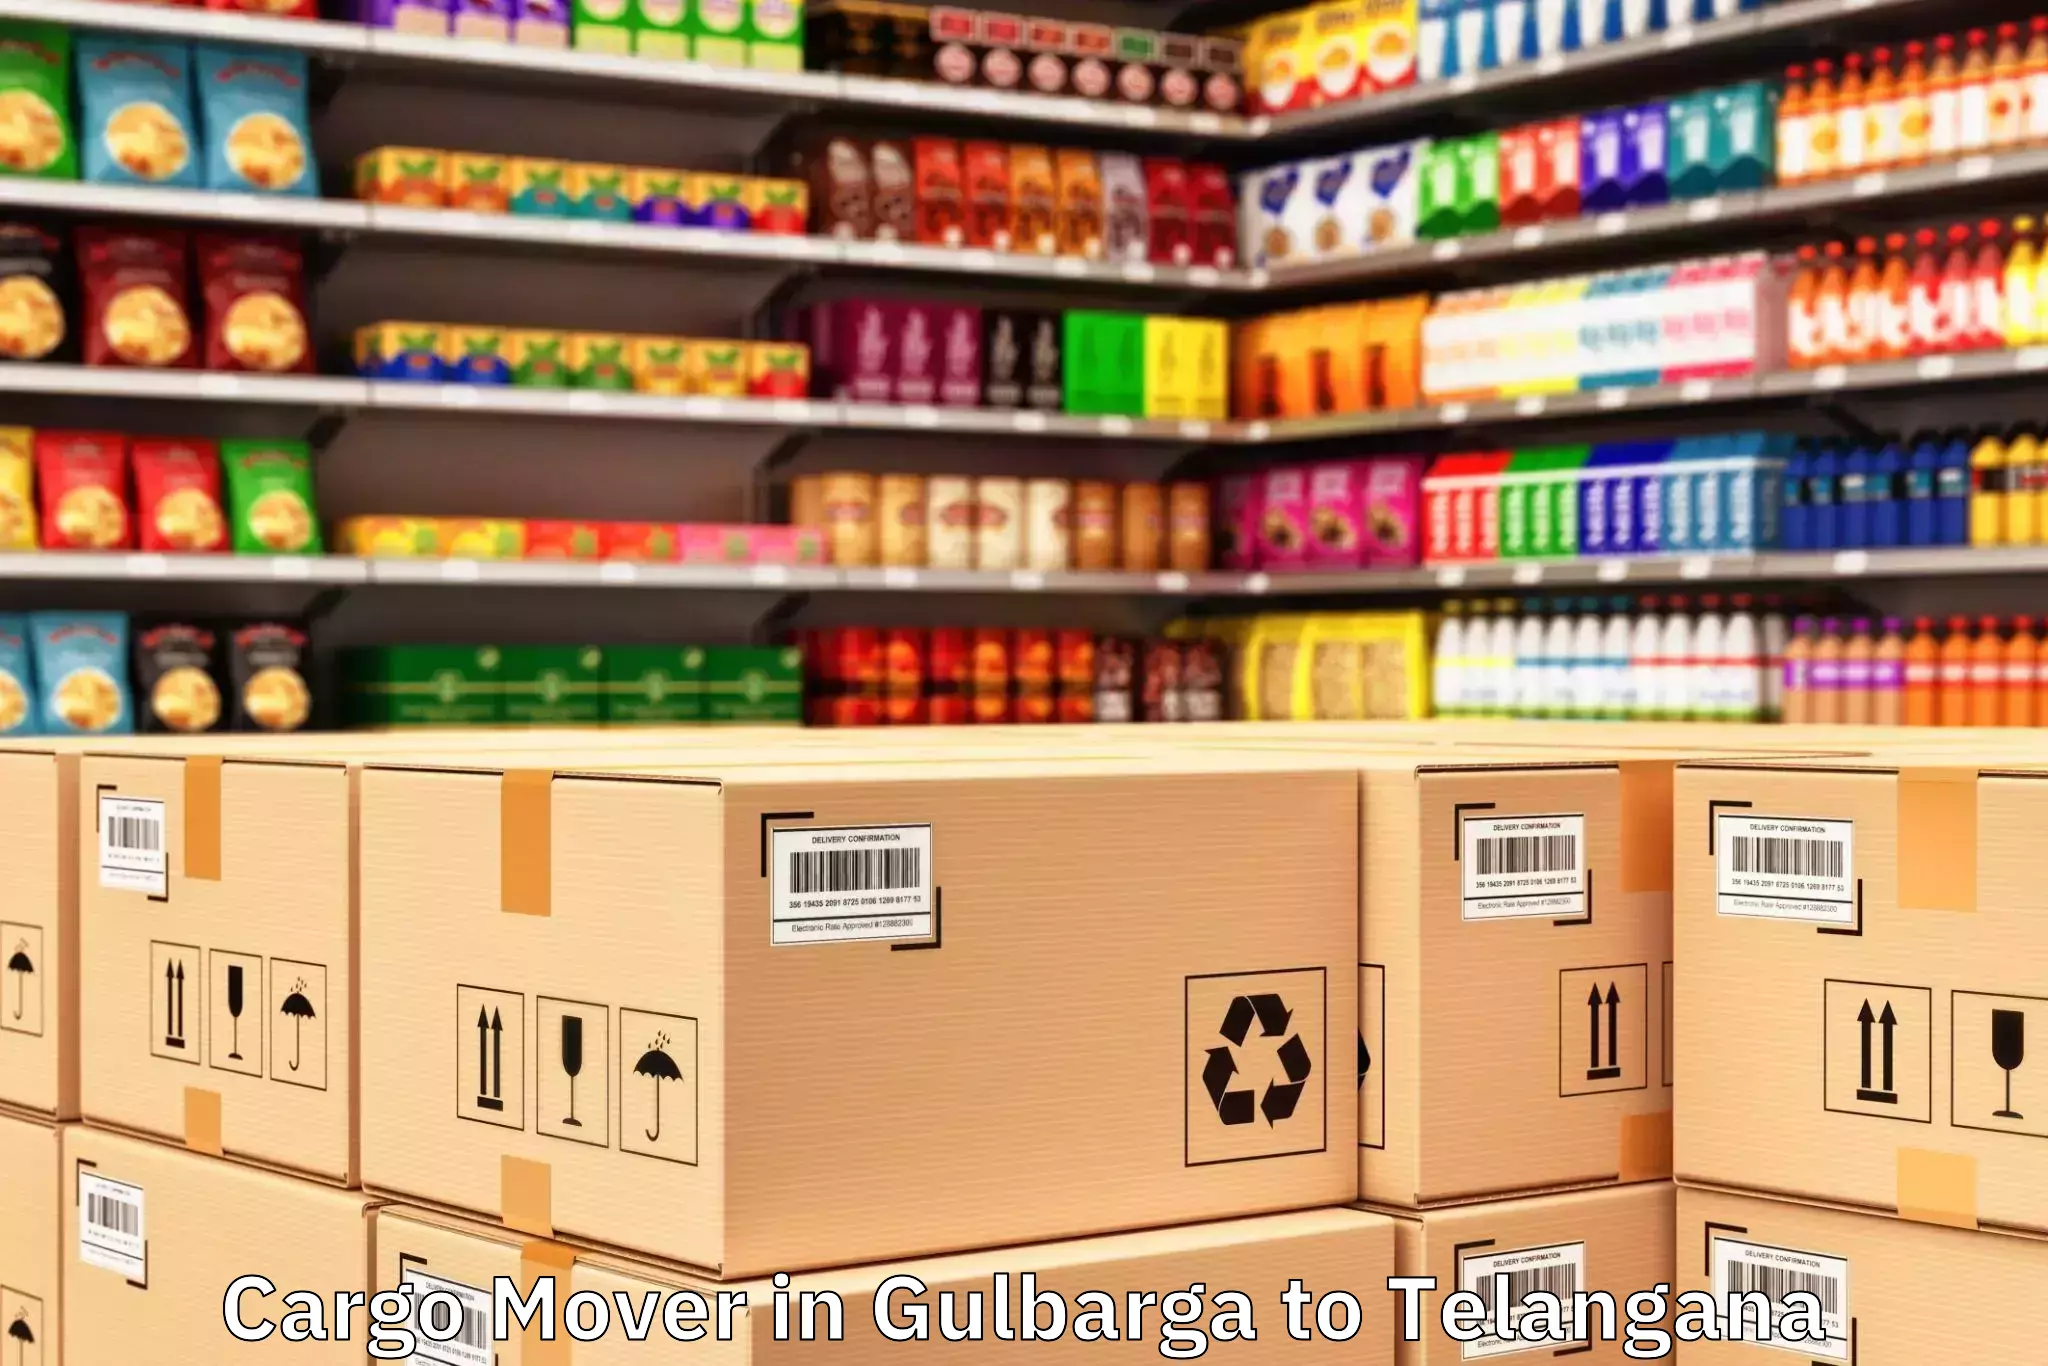 Gulbarga to Telangana Cargo Mover Booking